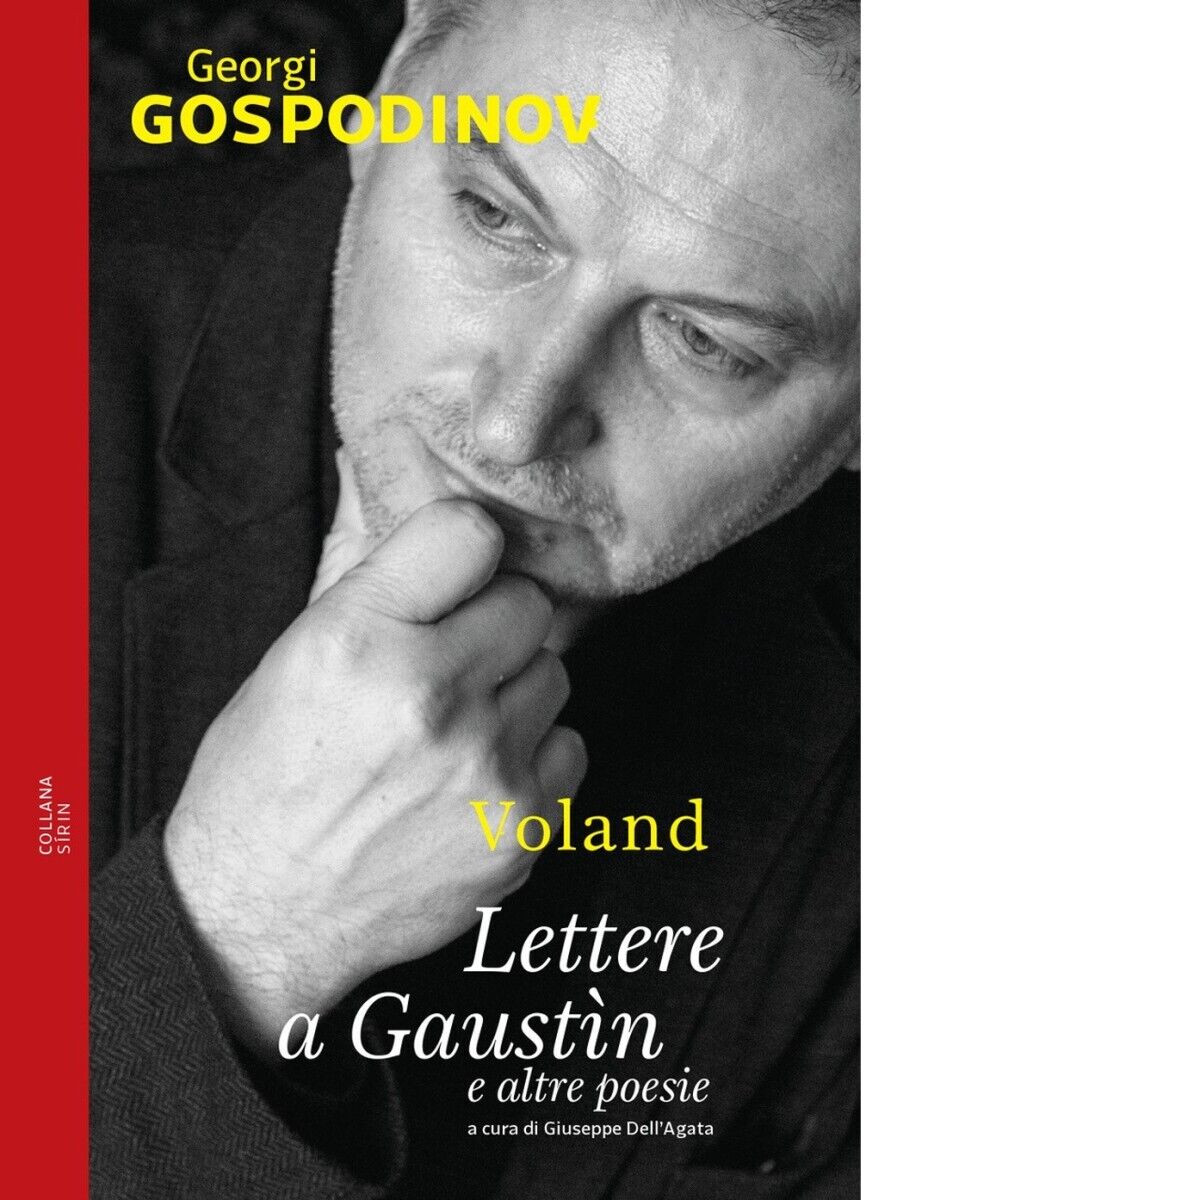  Lettere a Gaust?n e altre poesie di Georgi Gospodinov, 2022, Voland